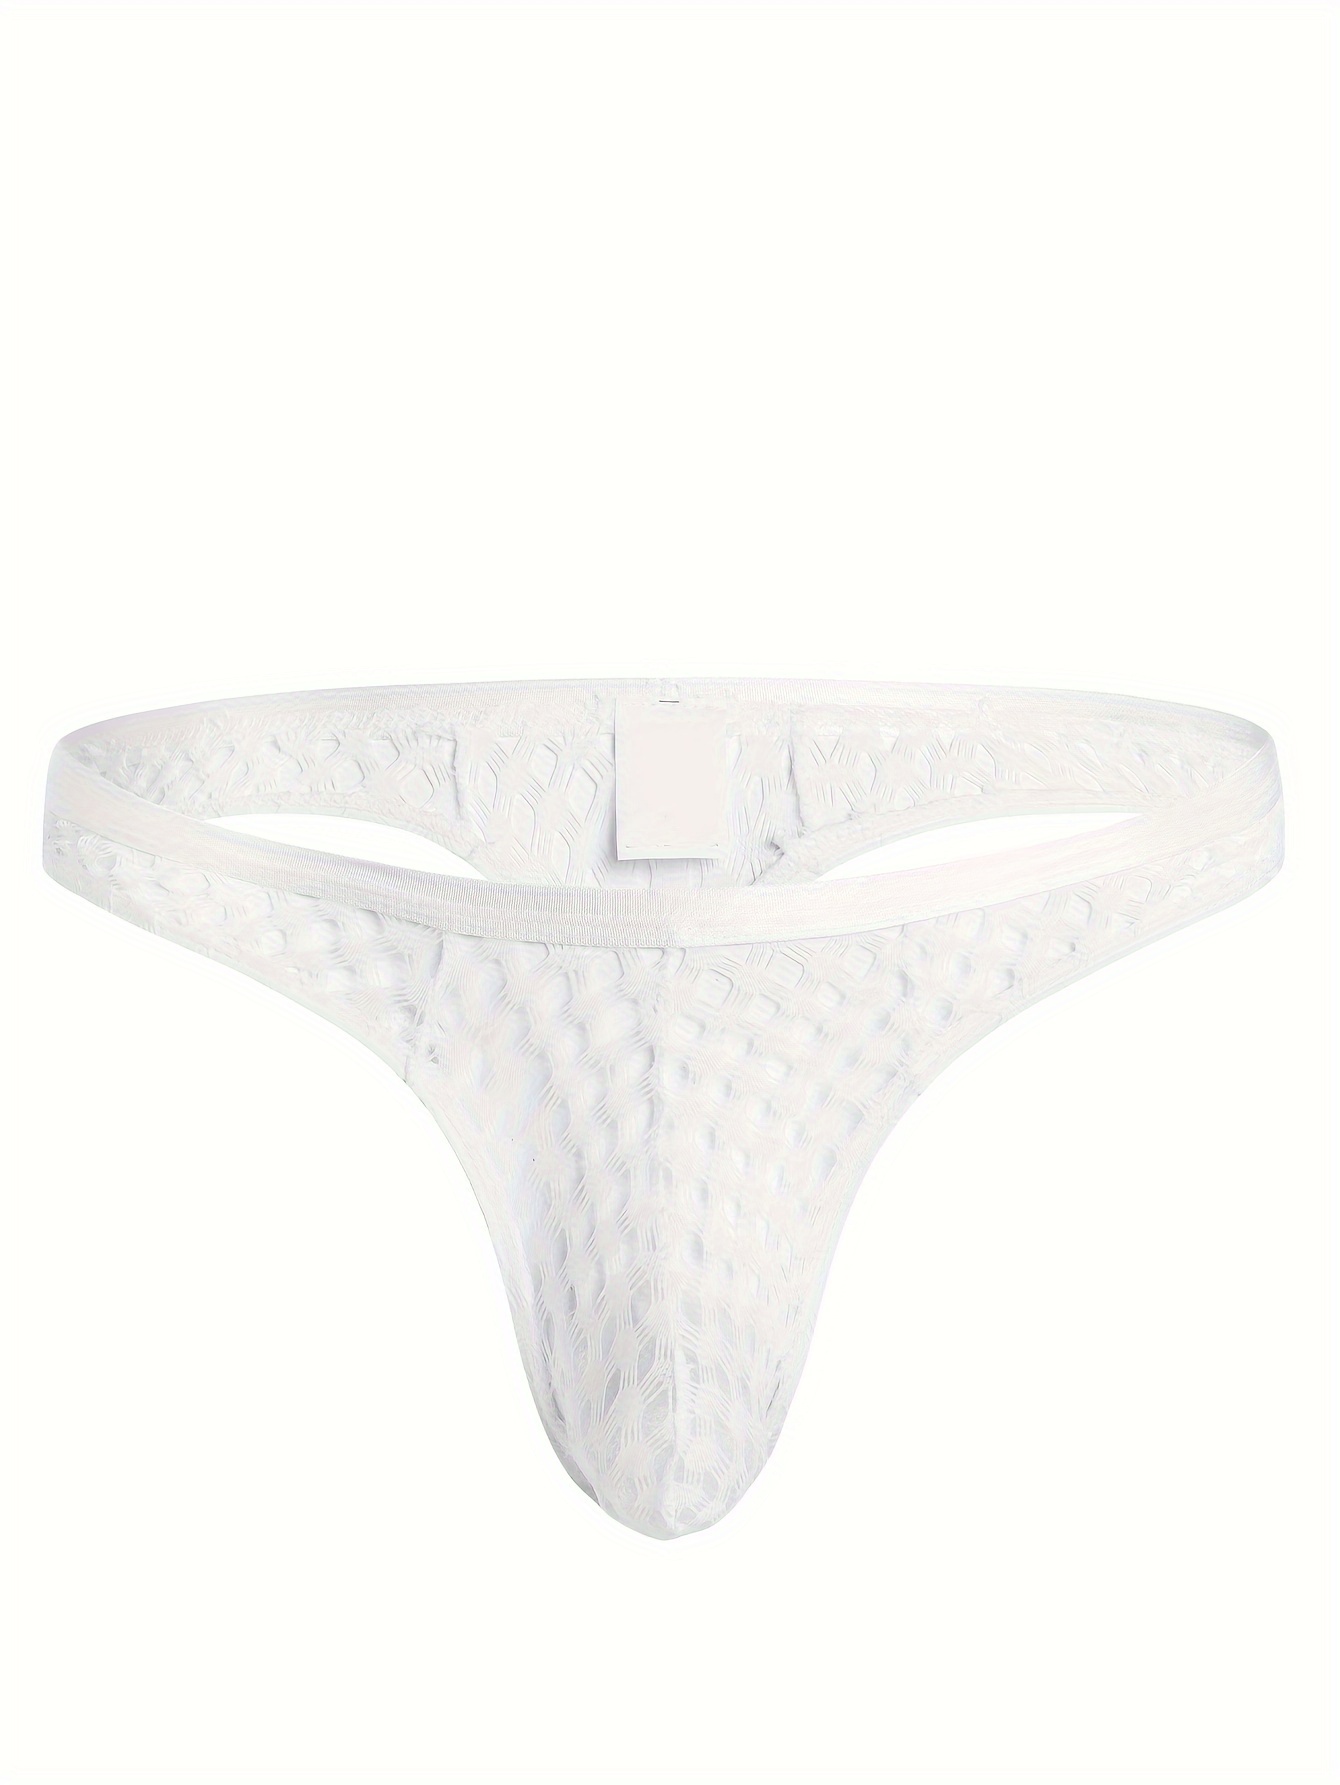 T Lingerie Mesh G-string Sexy Panties Underwear Briefs string